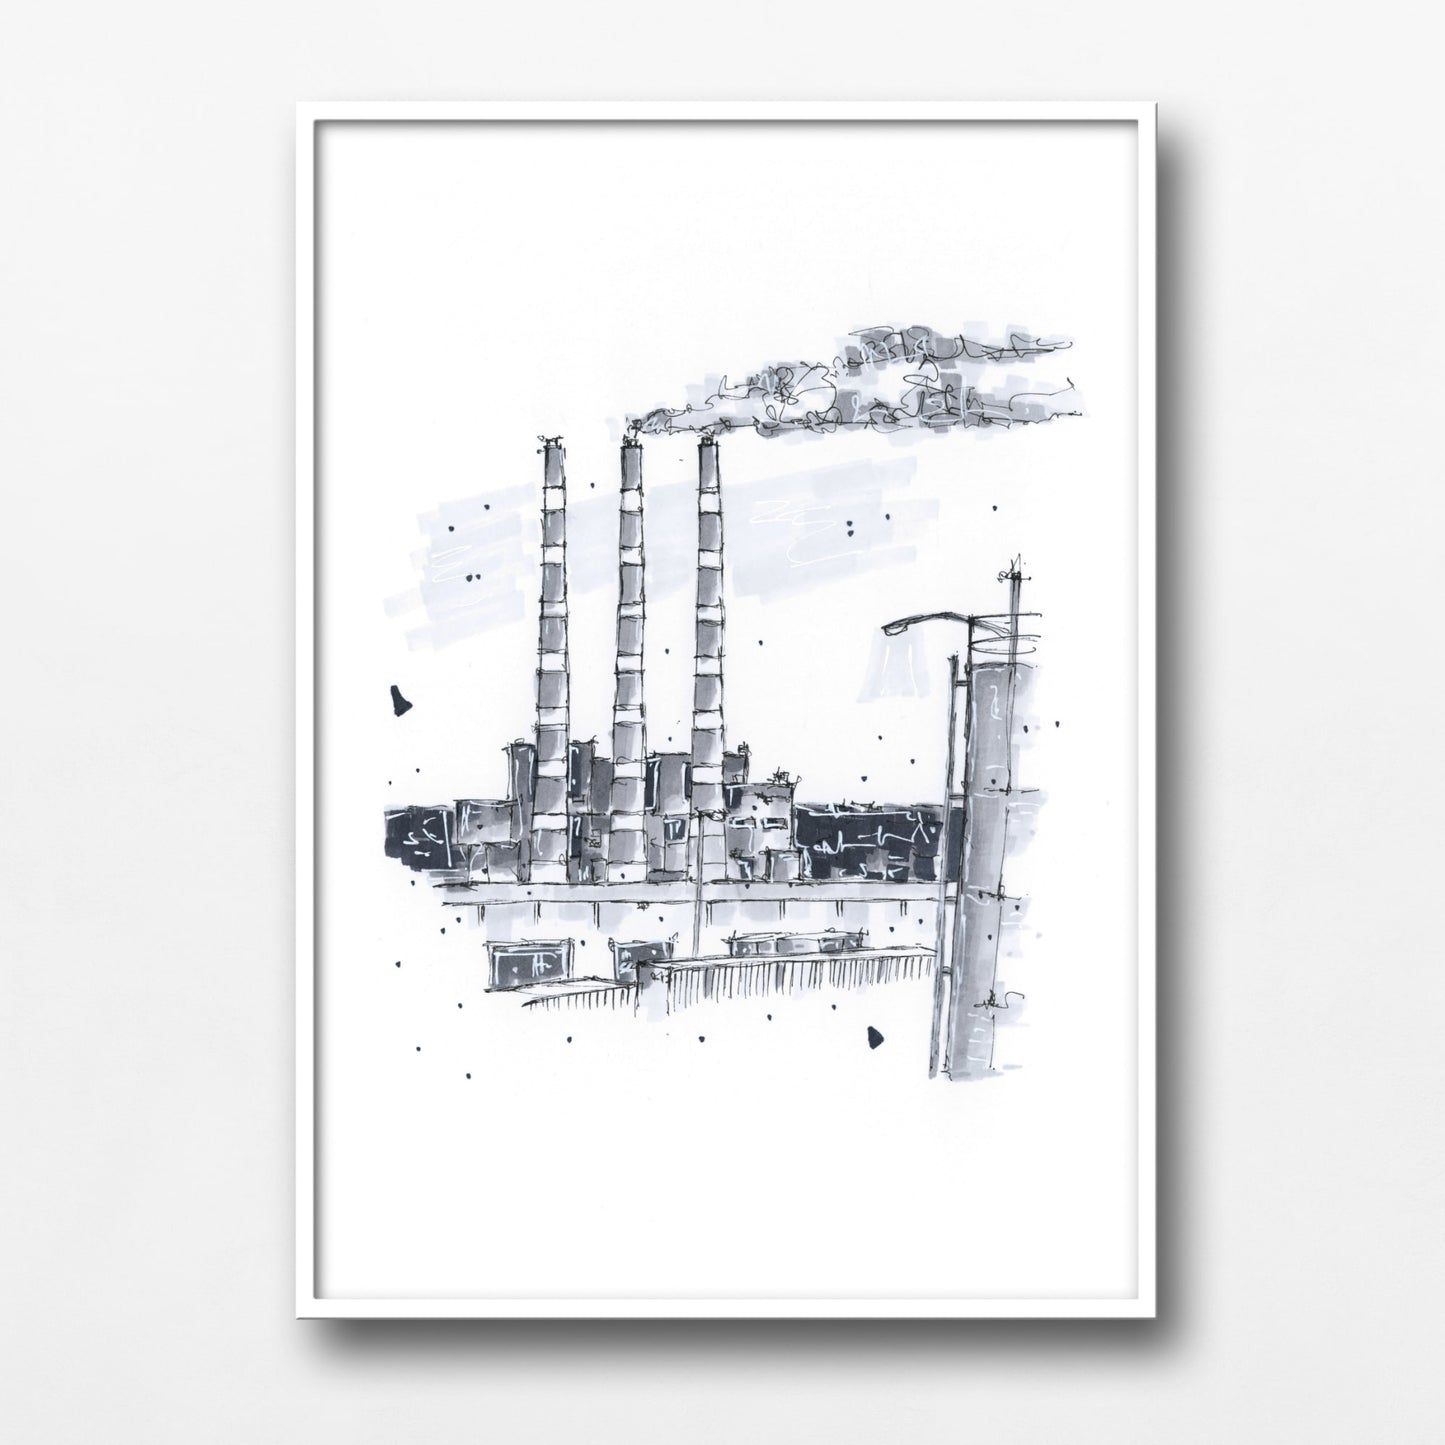 DTS0031 - Tufts Cove Generating Station Halifax Nova Scotia Sketch, Art Print - Artwork Print Sketch 2 - Downtown Sketcher